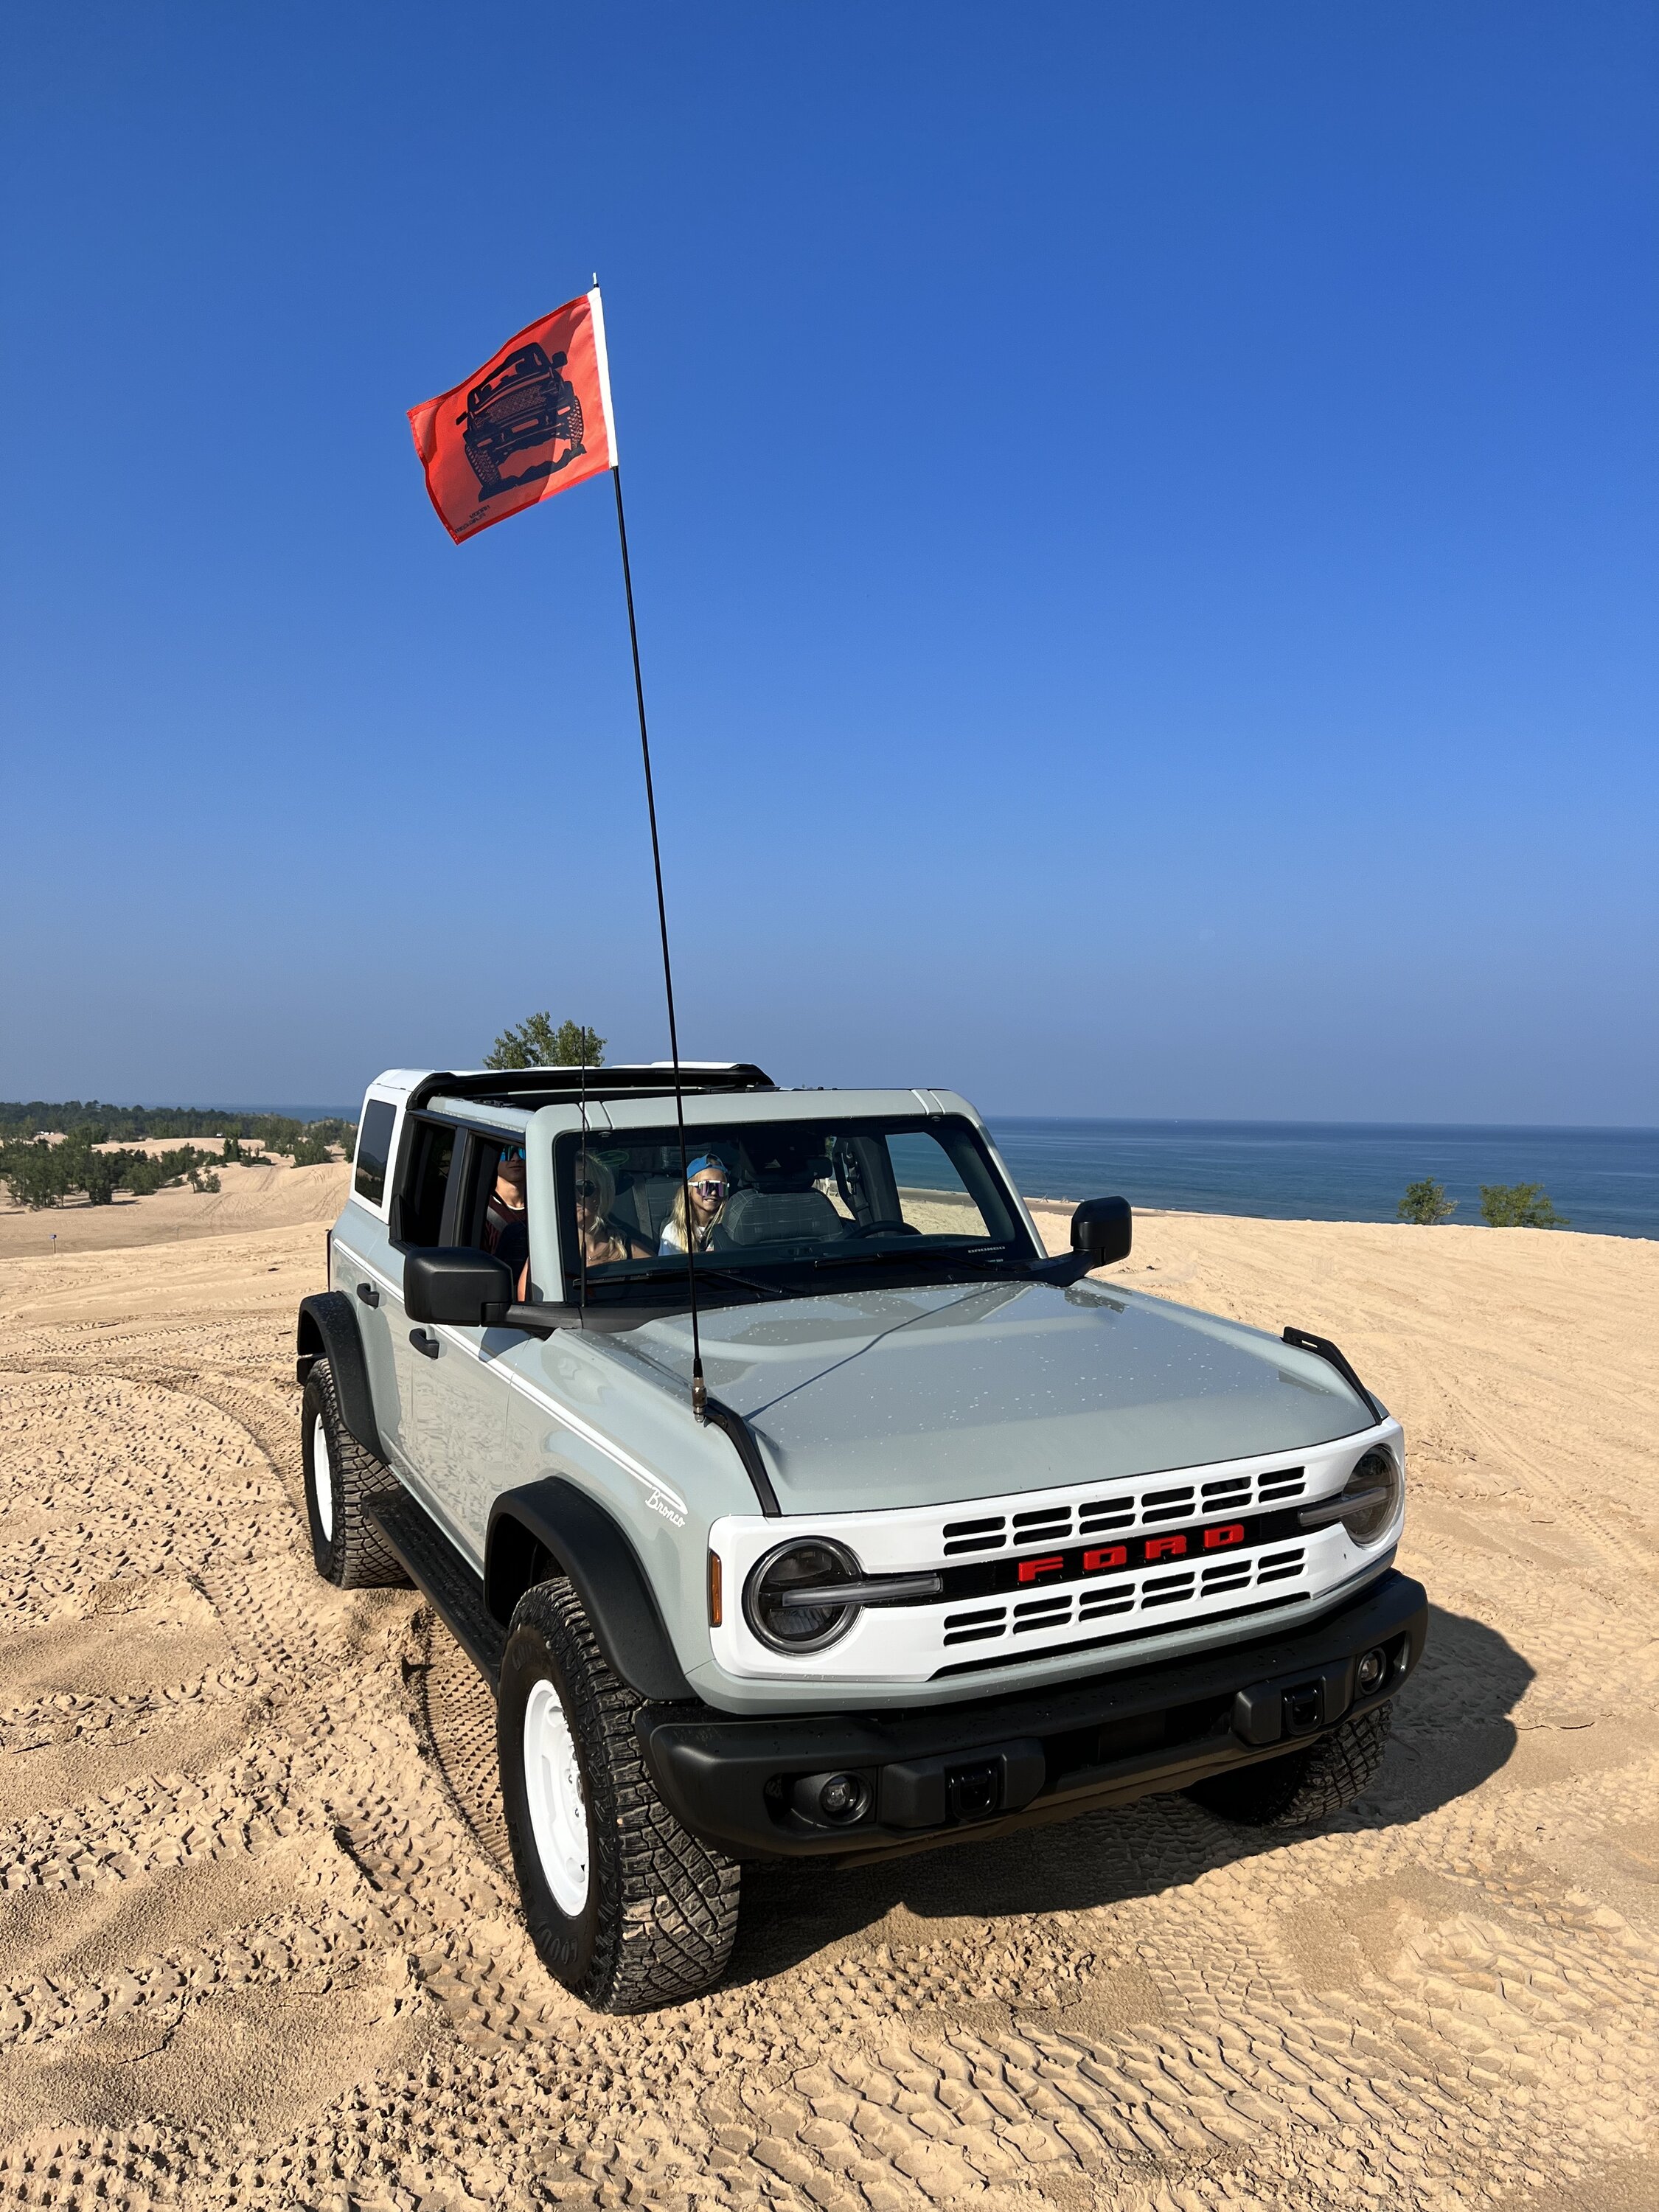 Ford Bronco Let’s see those Beach pics! E90978EE-8677-4A45-9063-61E841C4AEBB